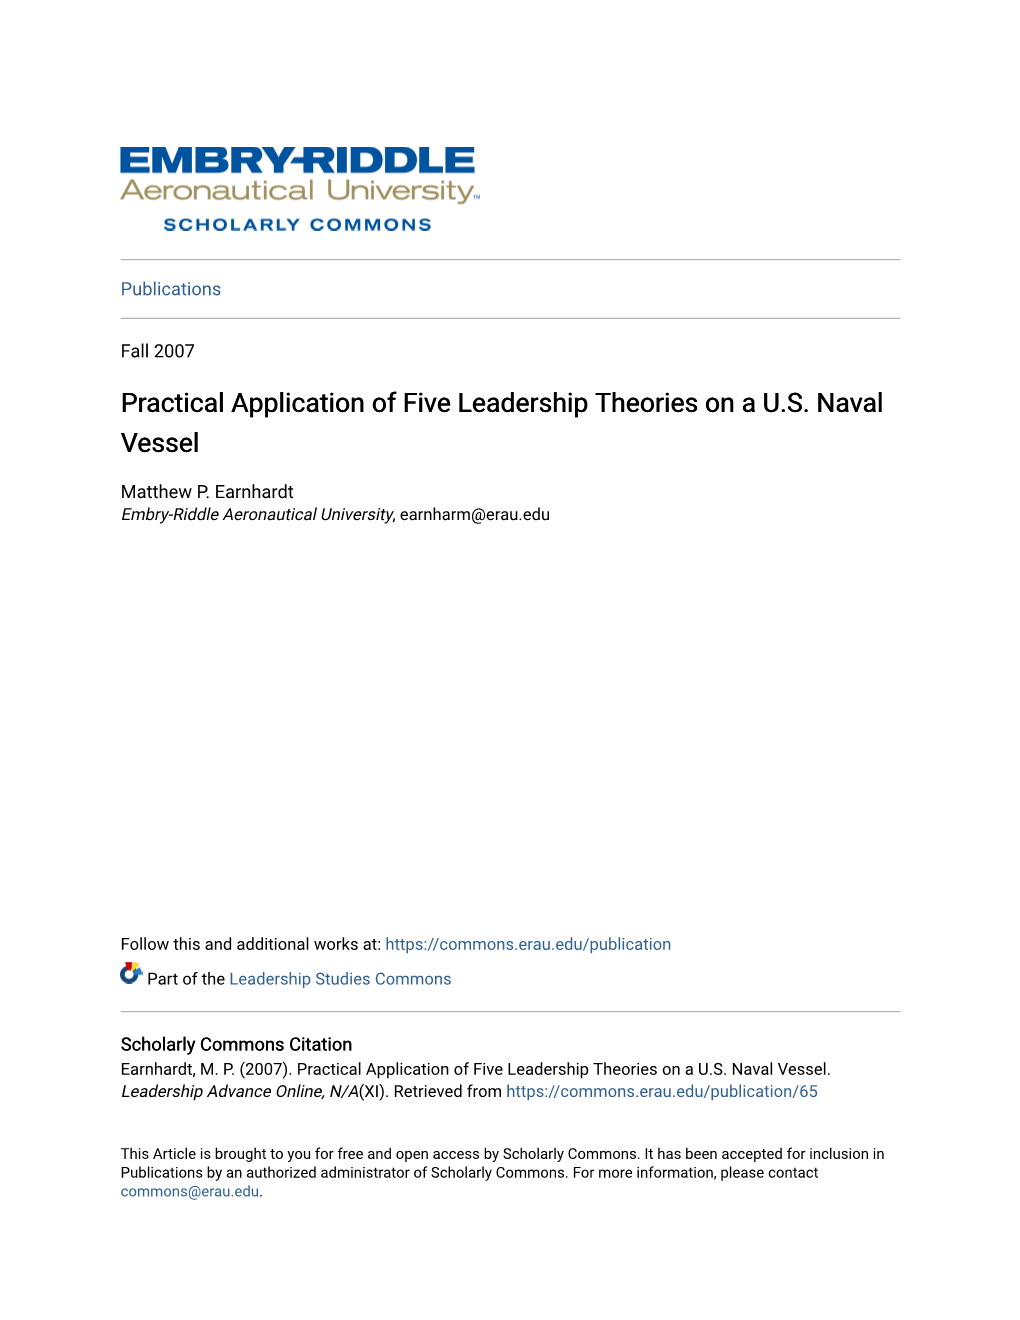 Practical Application of Five Leadership Theories on a U.S. Naval Vessel